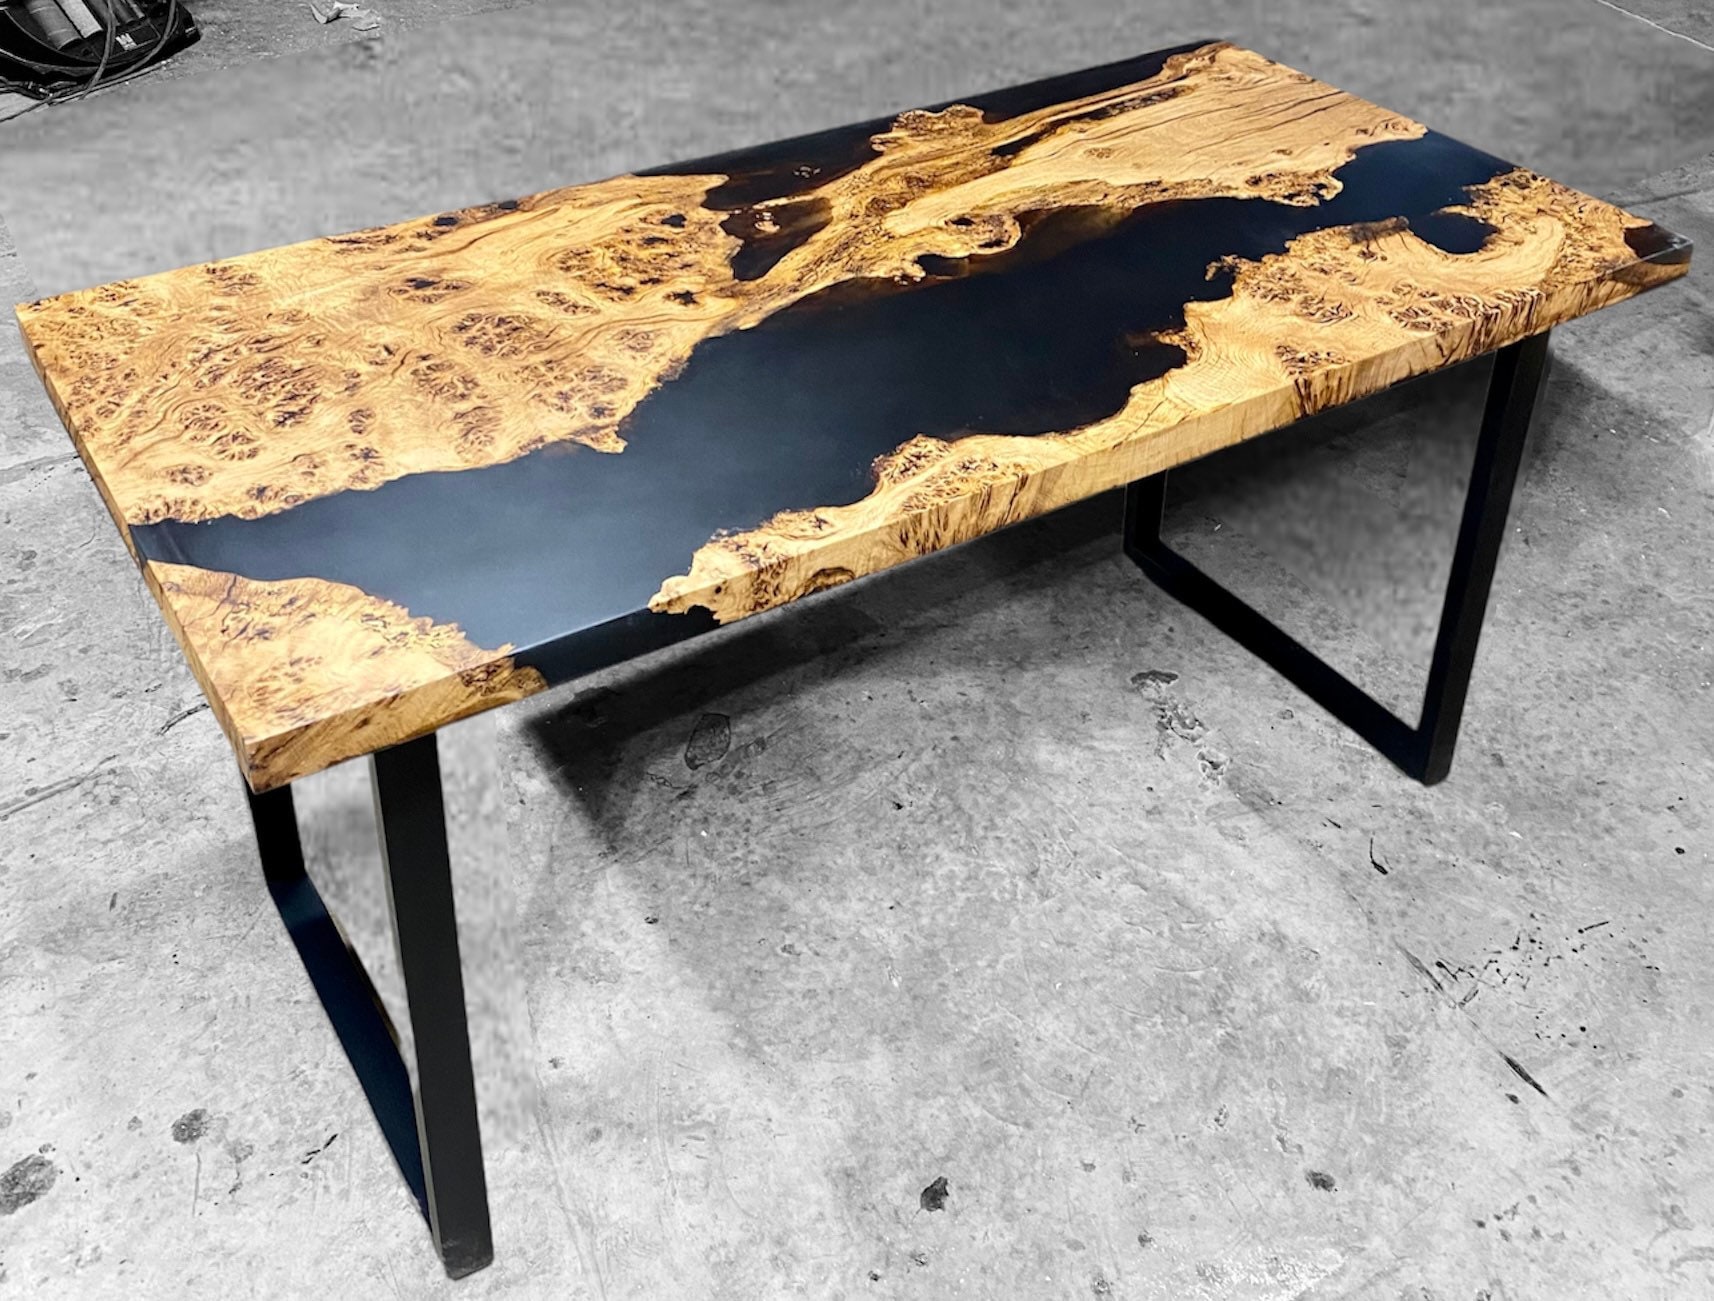 Made to Order Epoxy Resin Table, Custom Table, Ocean Design, Wood Art  Resin, Coffee Table, Resin Art, Epoxy Table, Resin Table